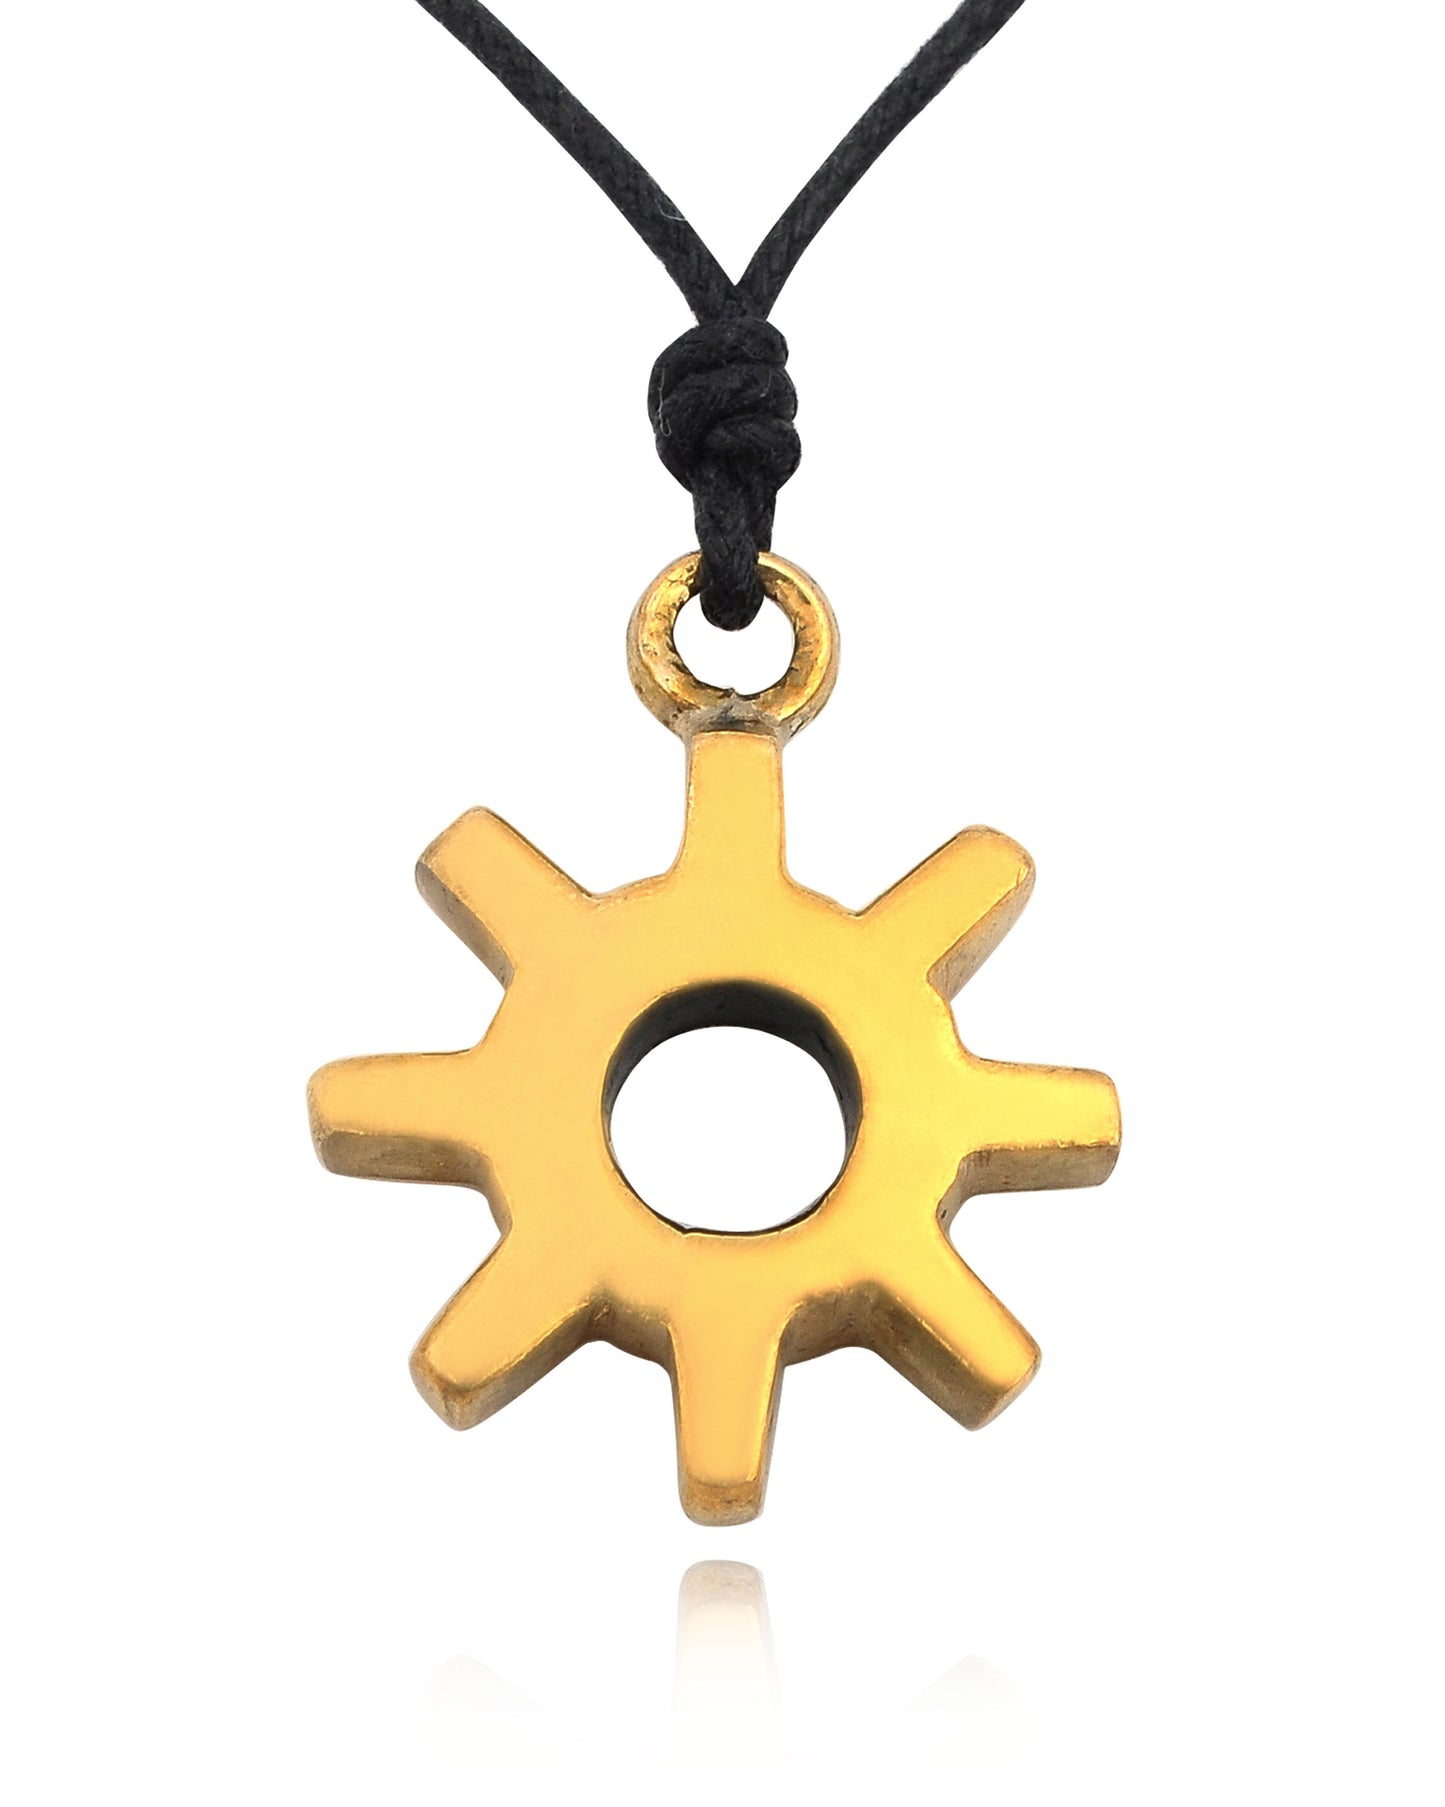 Gear Machine Gold Brass Charm  Necklace Pendant Jewelry